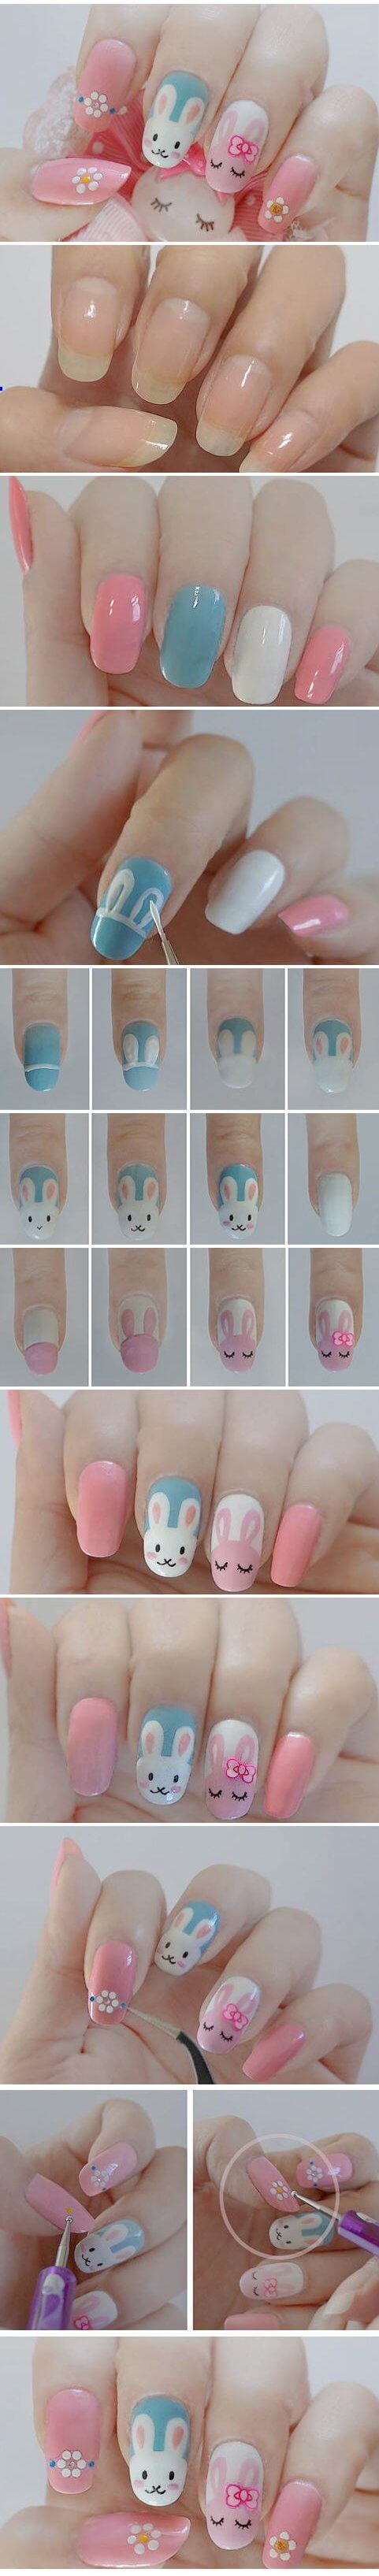 diy-cute-rabbit-nail-art Simple and Easy Nail Art Tutorial - Step by step